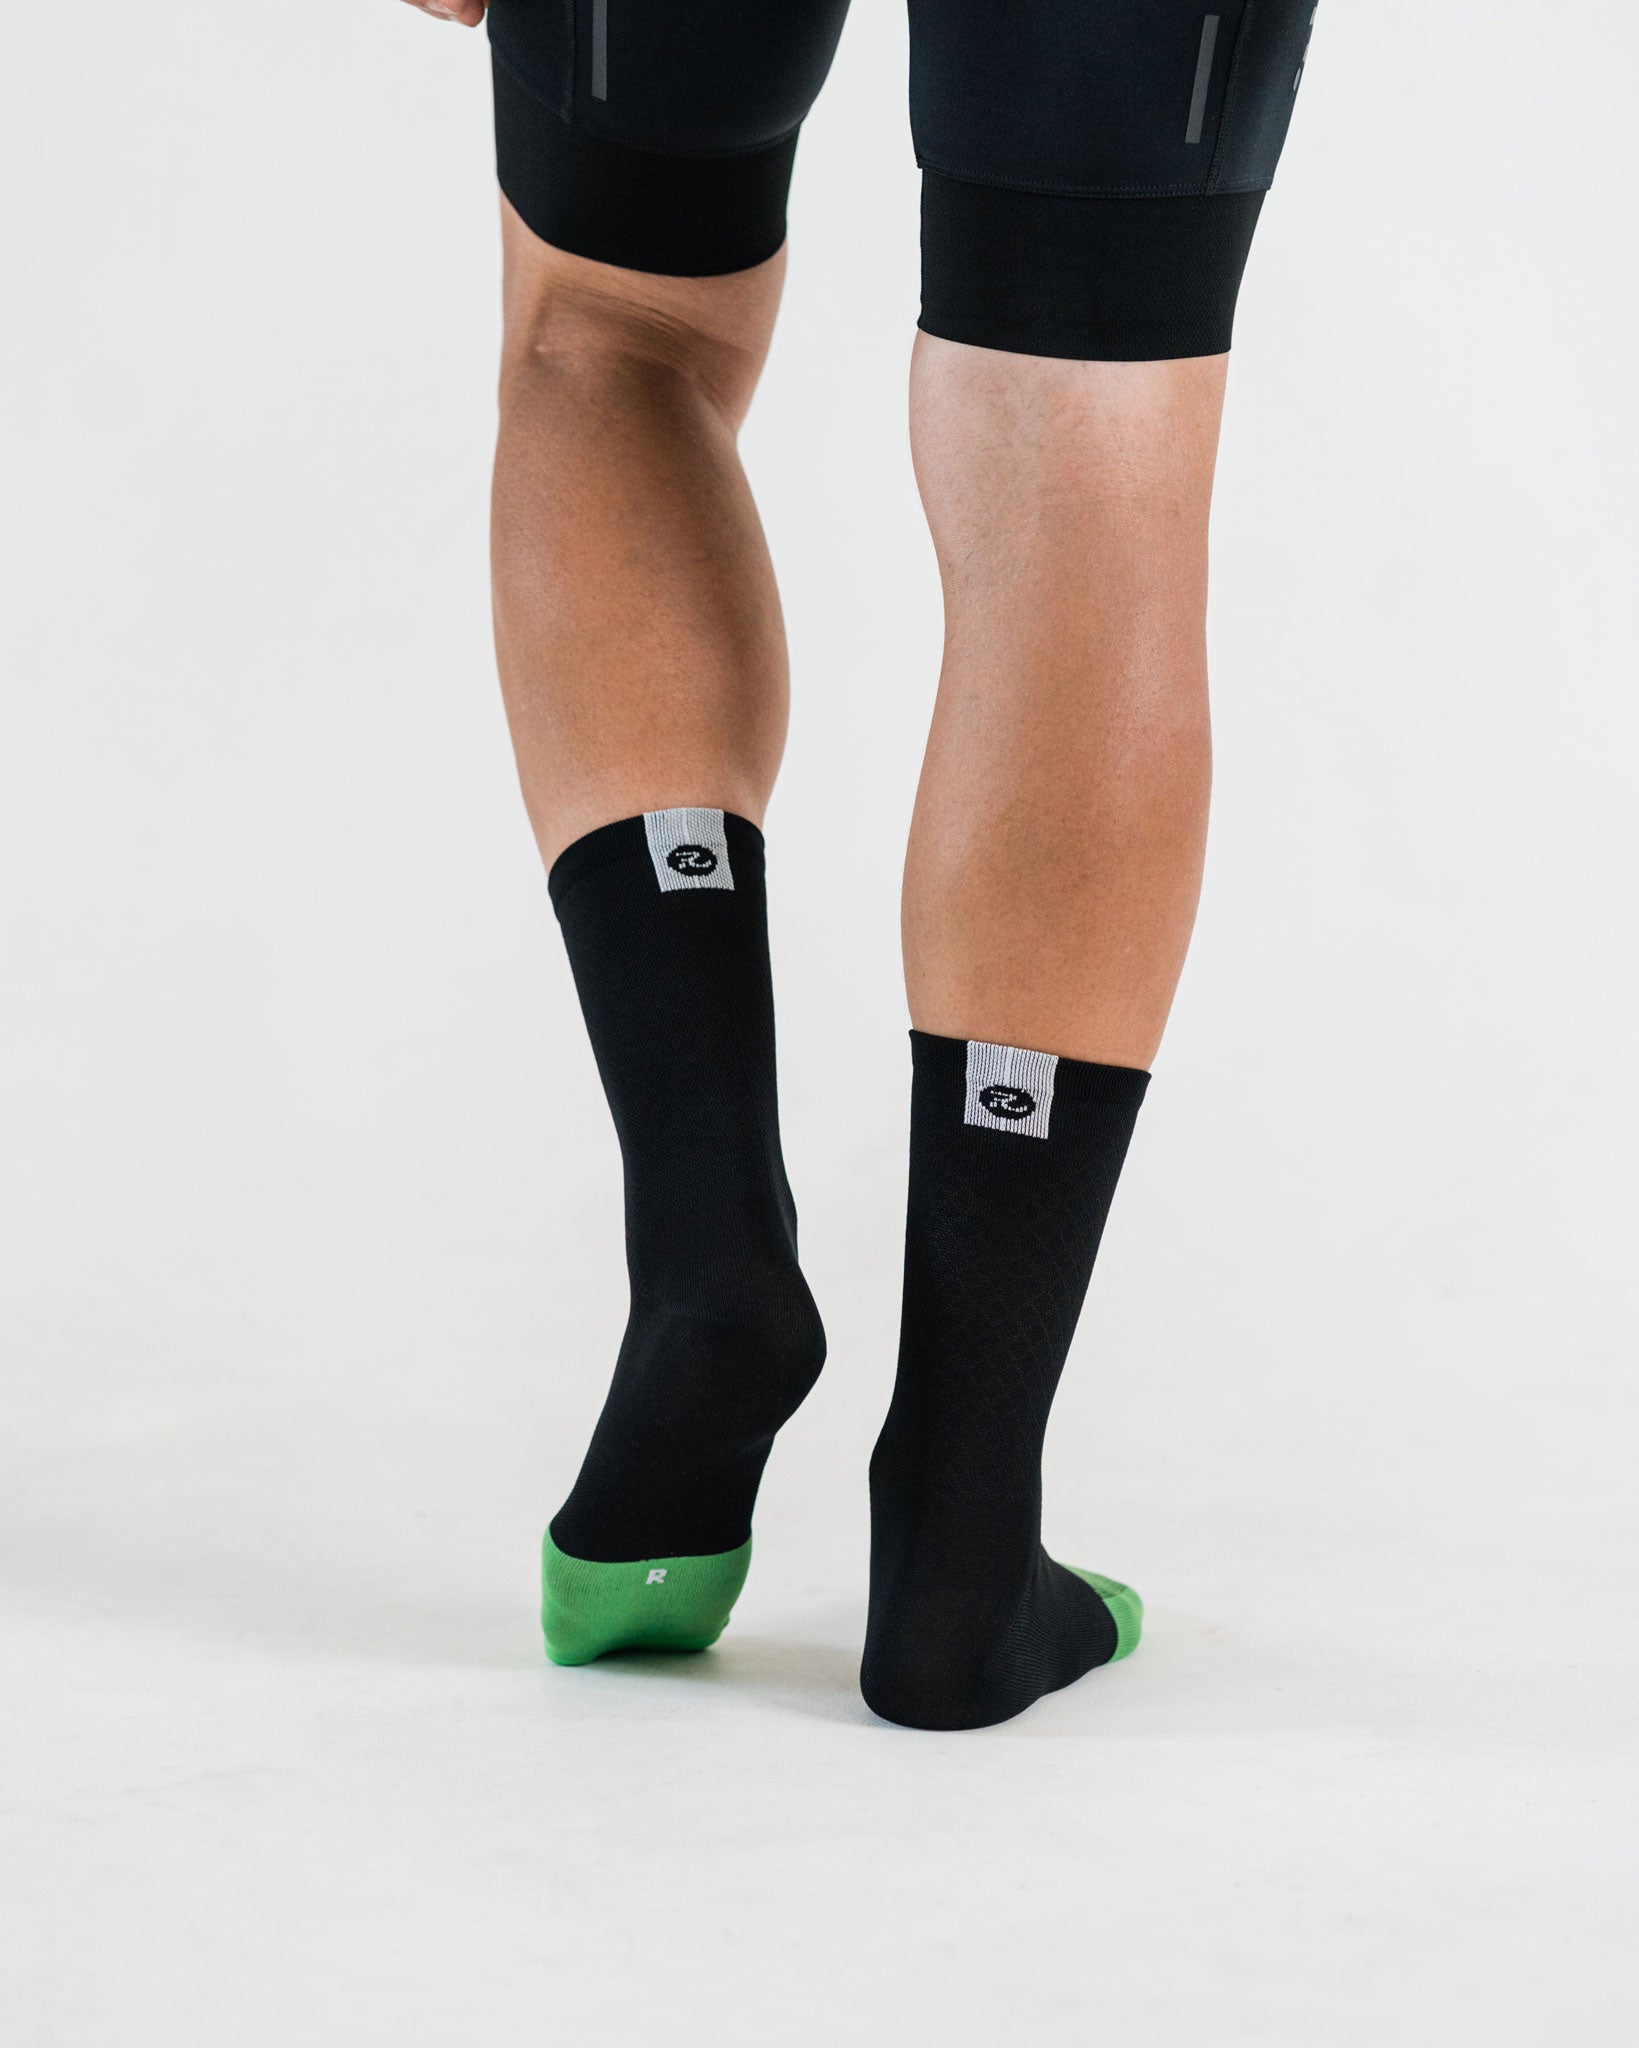 back view of black cycling socks